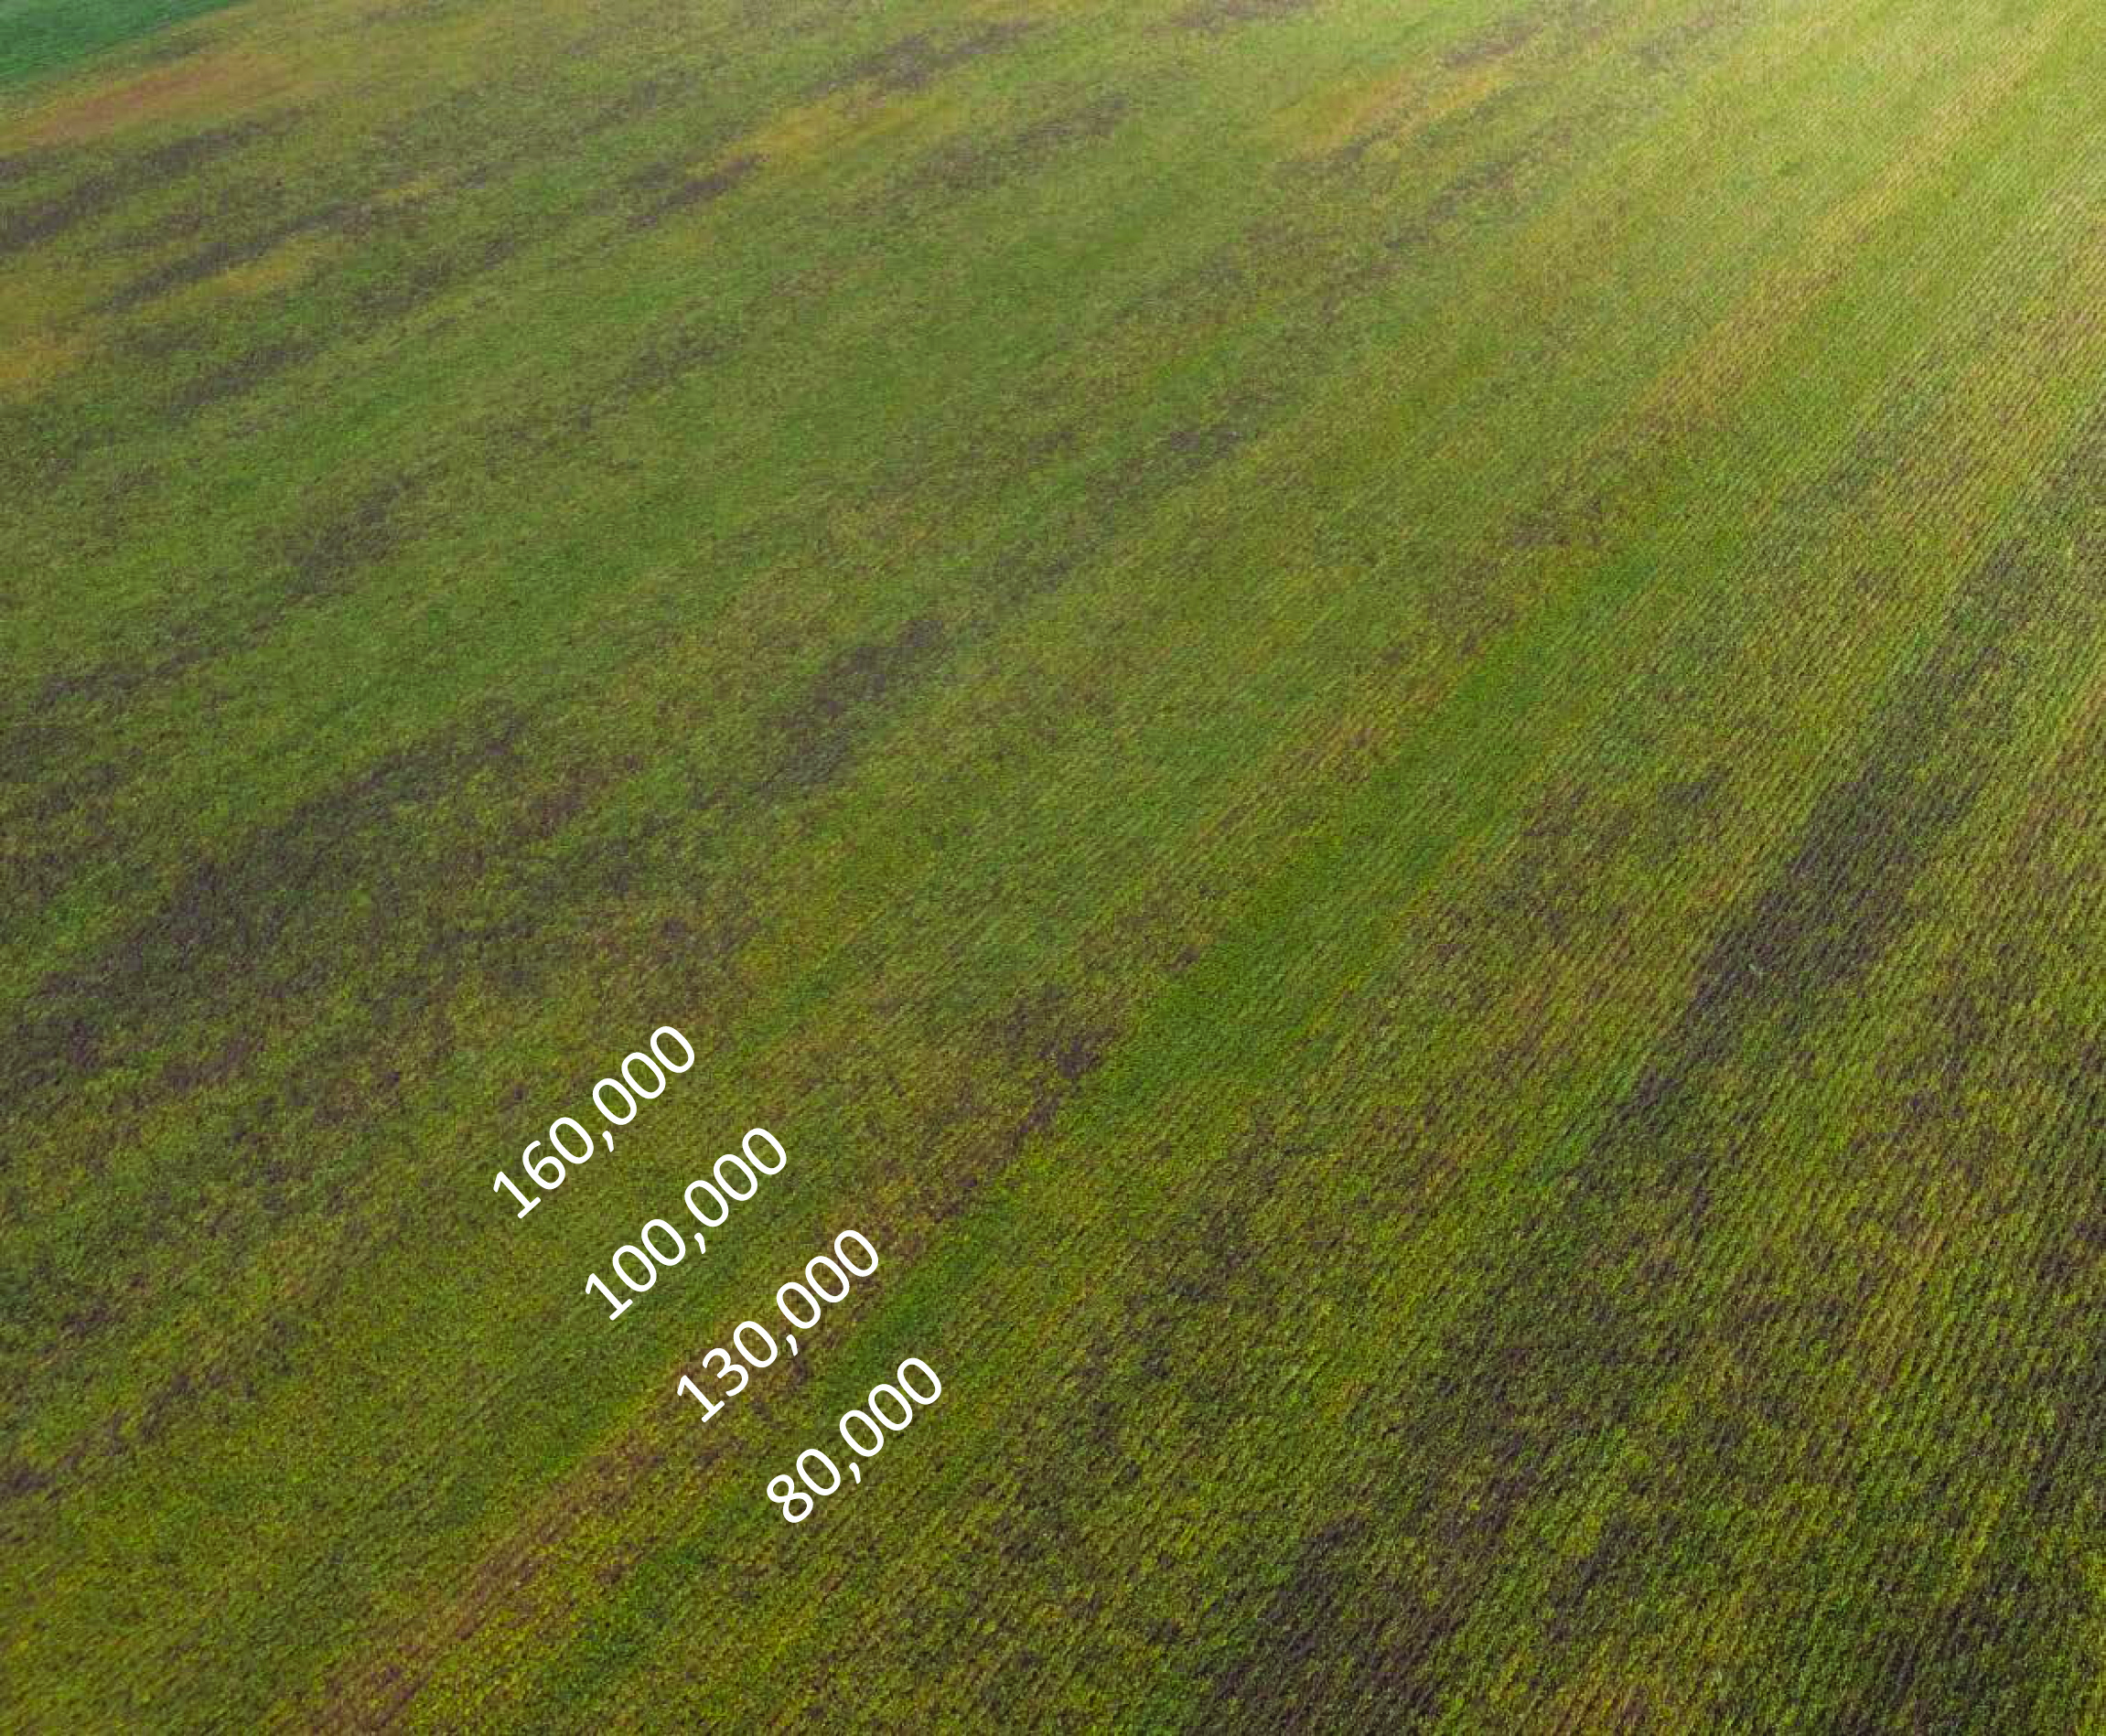 Drone image of soybean field